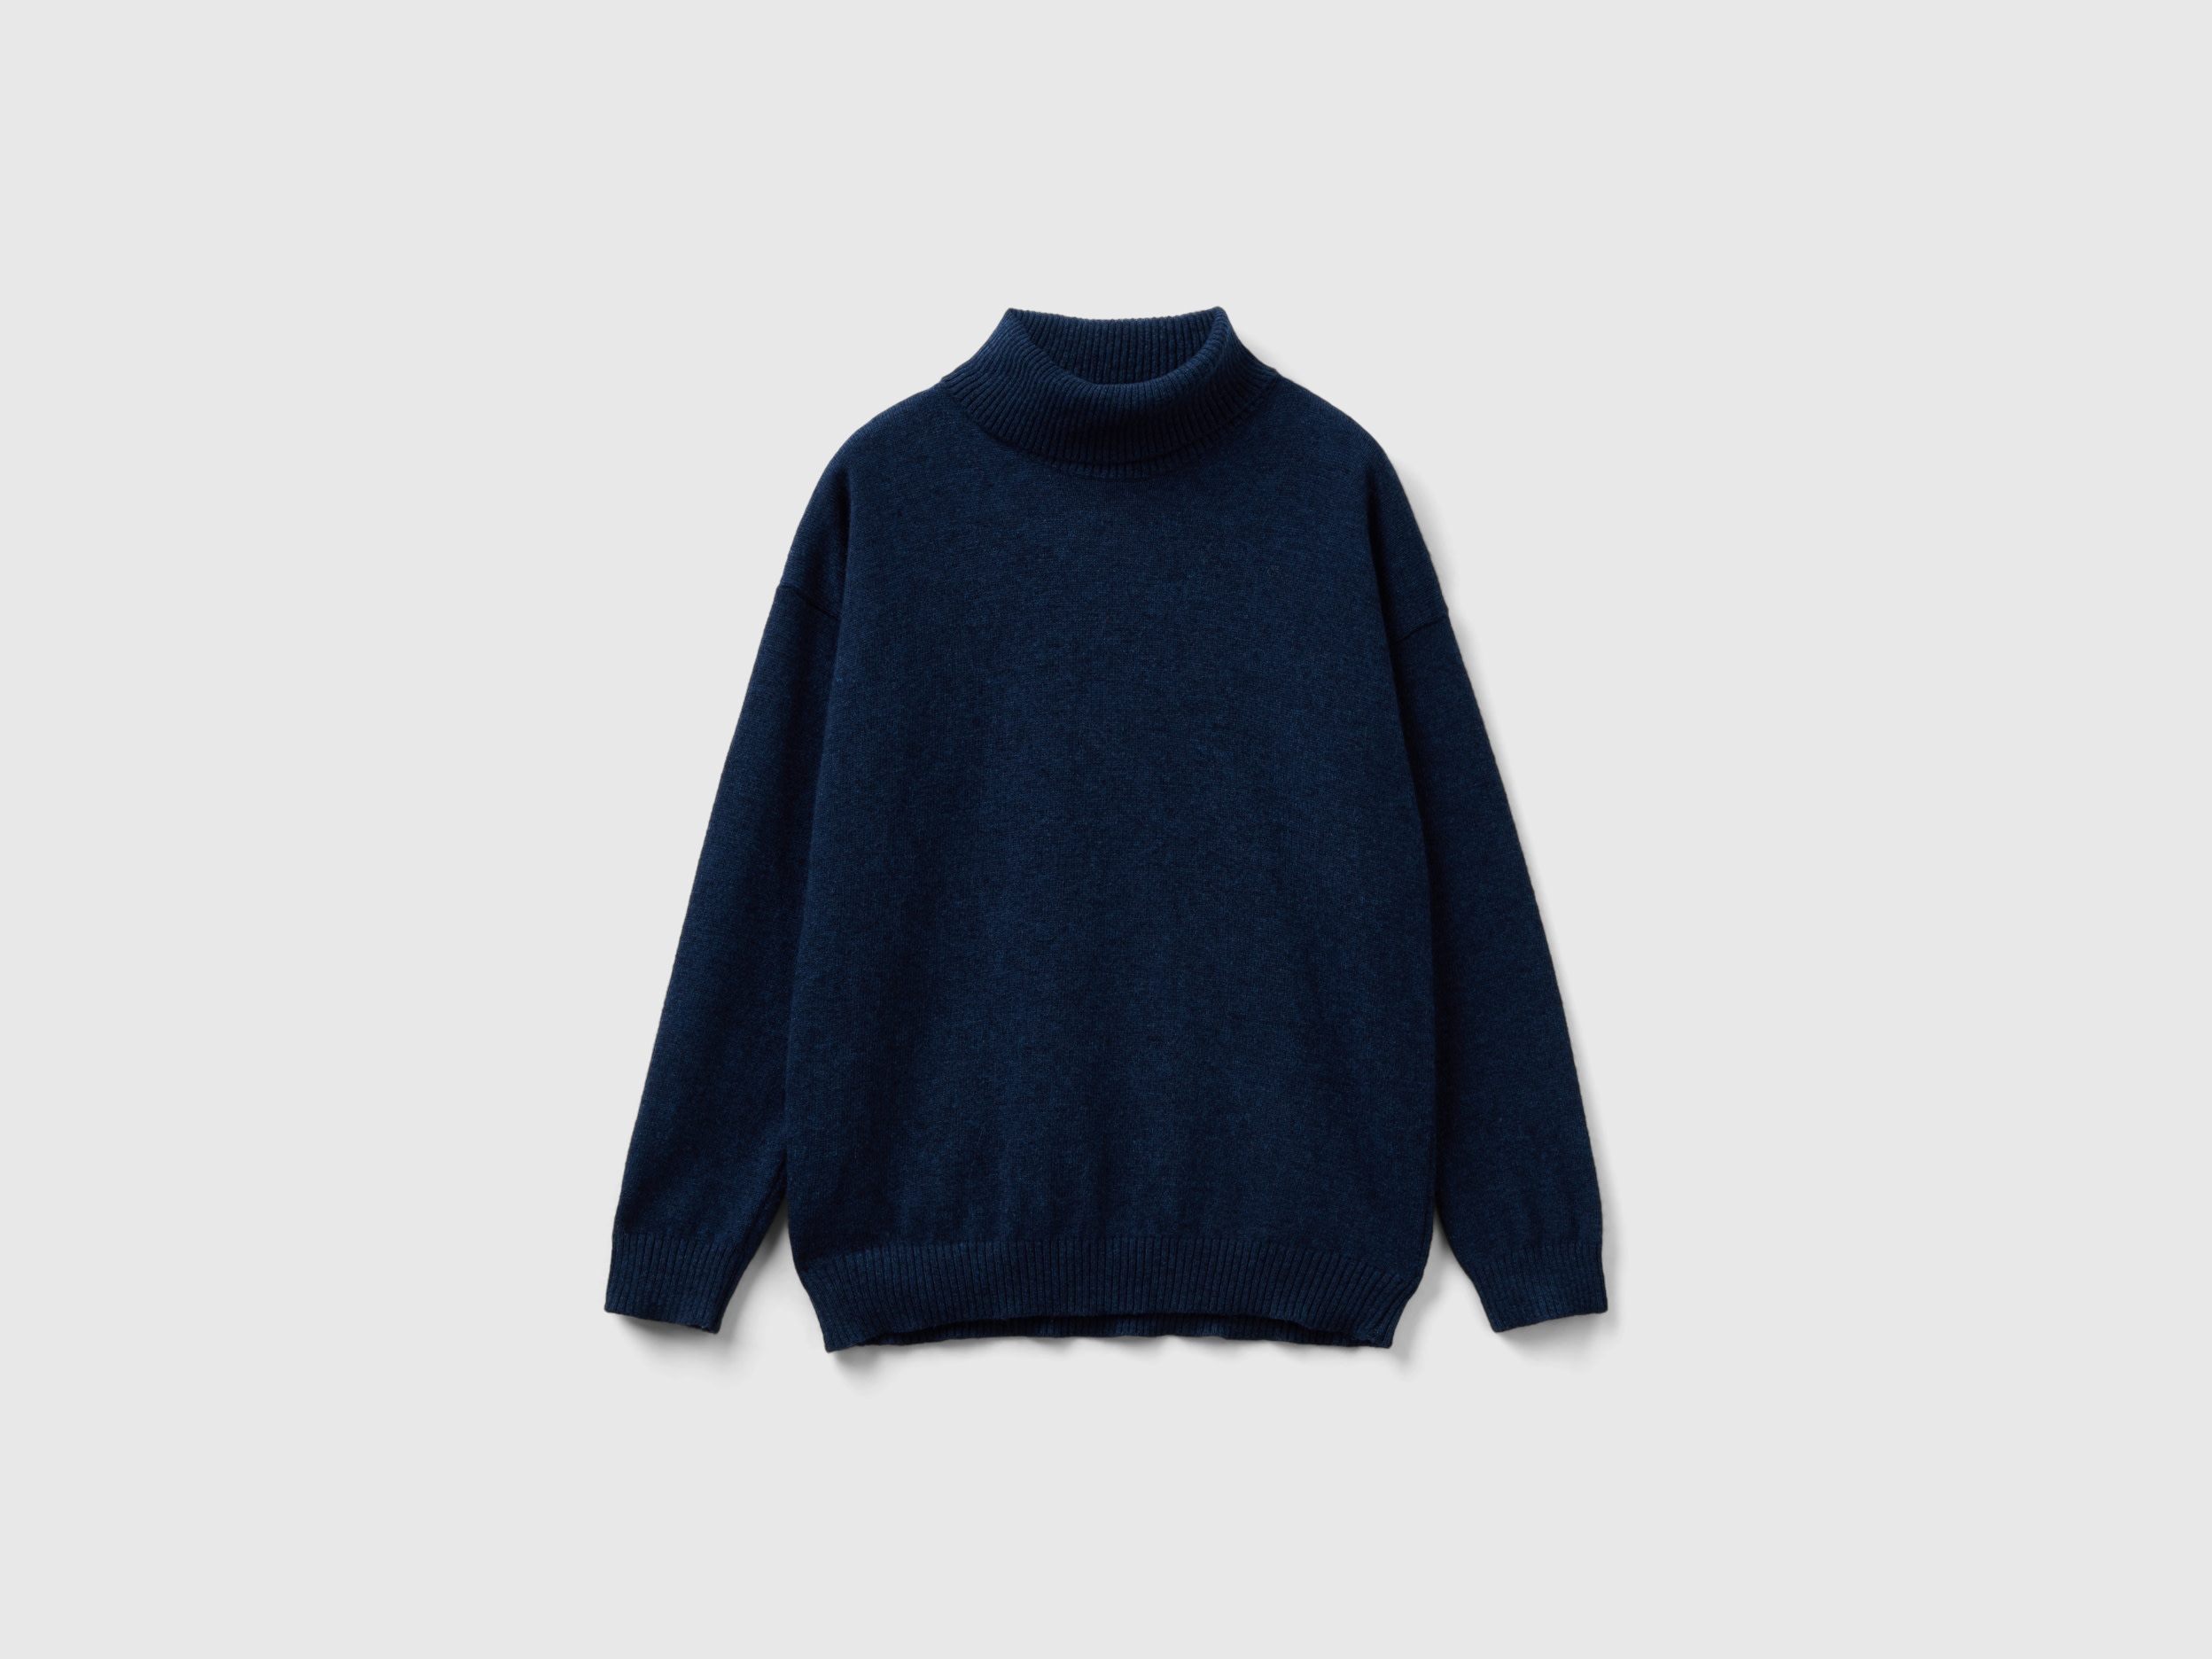 Benetton, Turtleneck Sweater In Cashmere And Wool Blend, size 2XL, Dark Blue, Kids